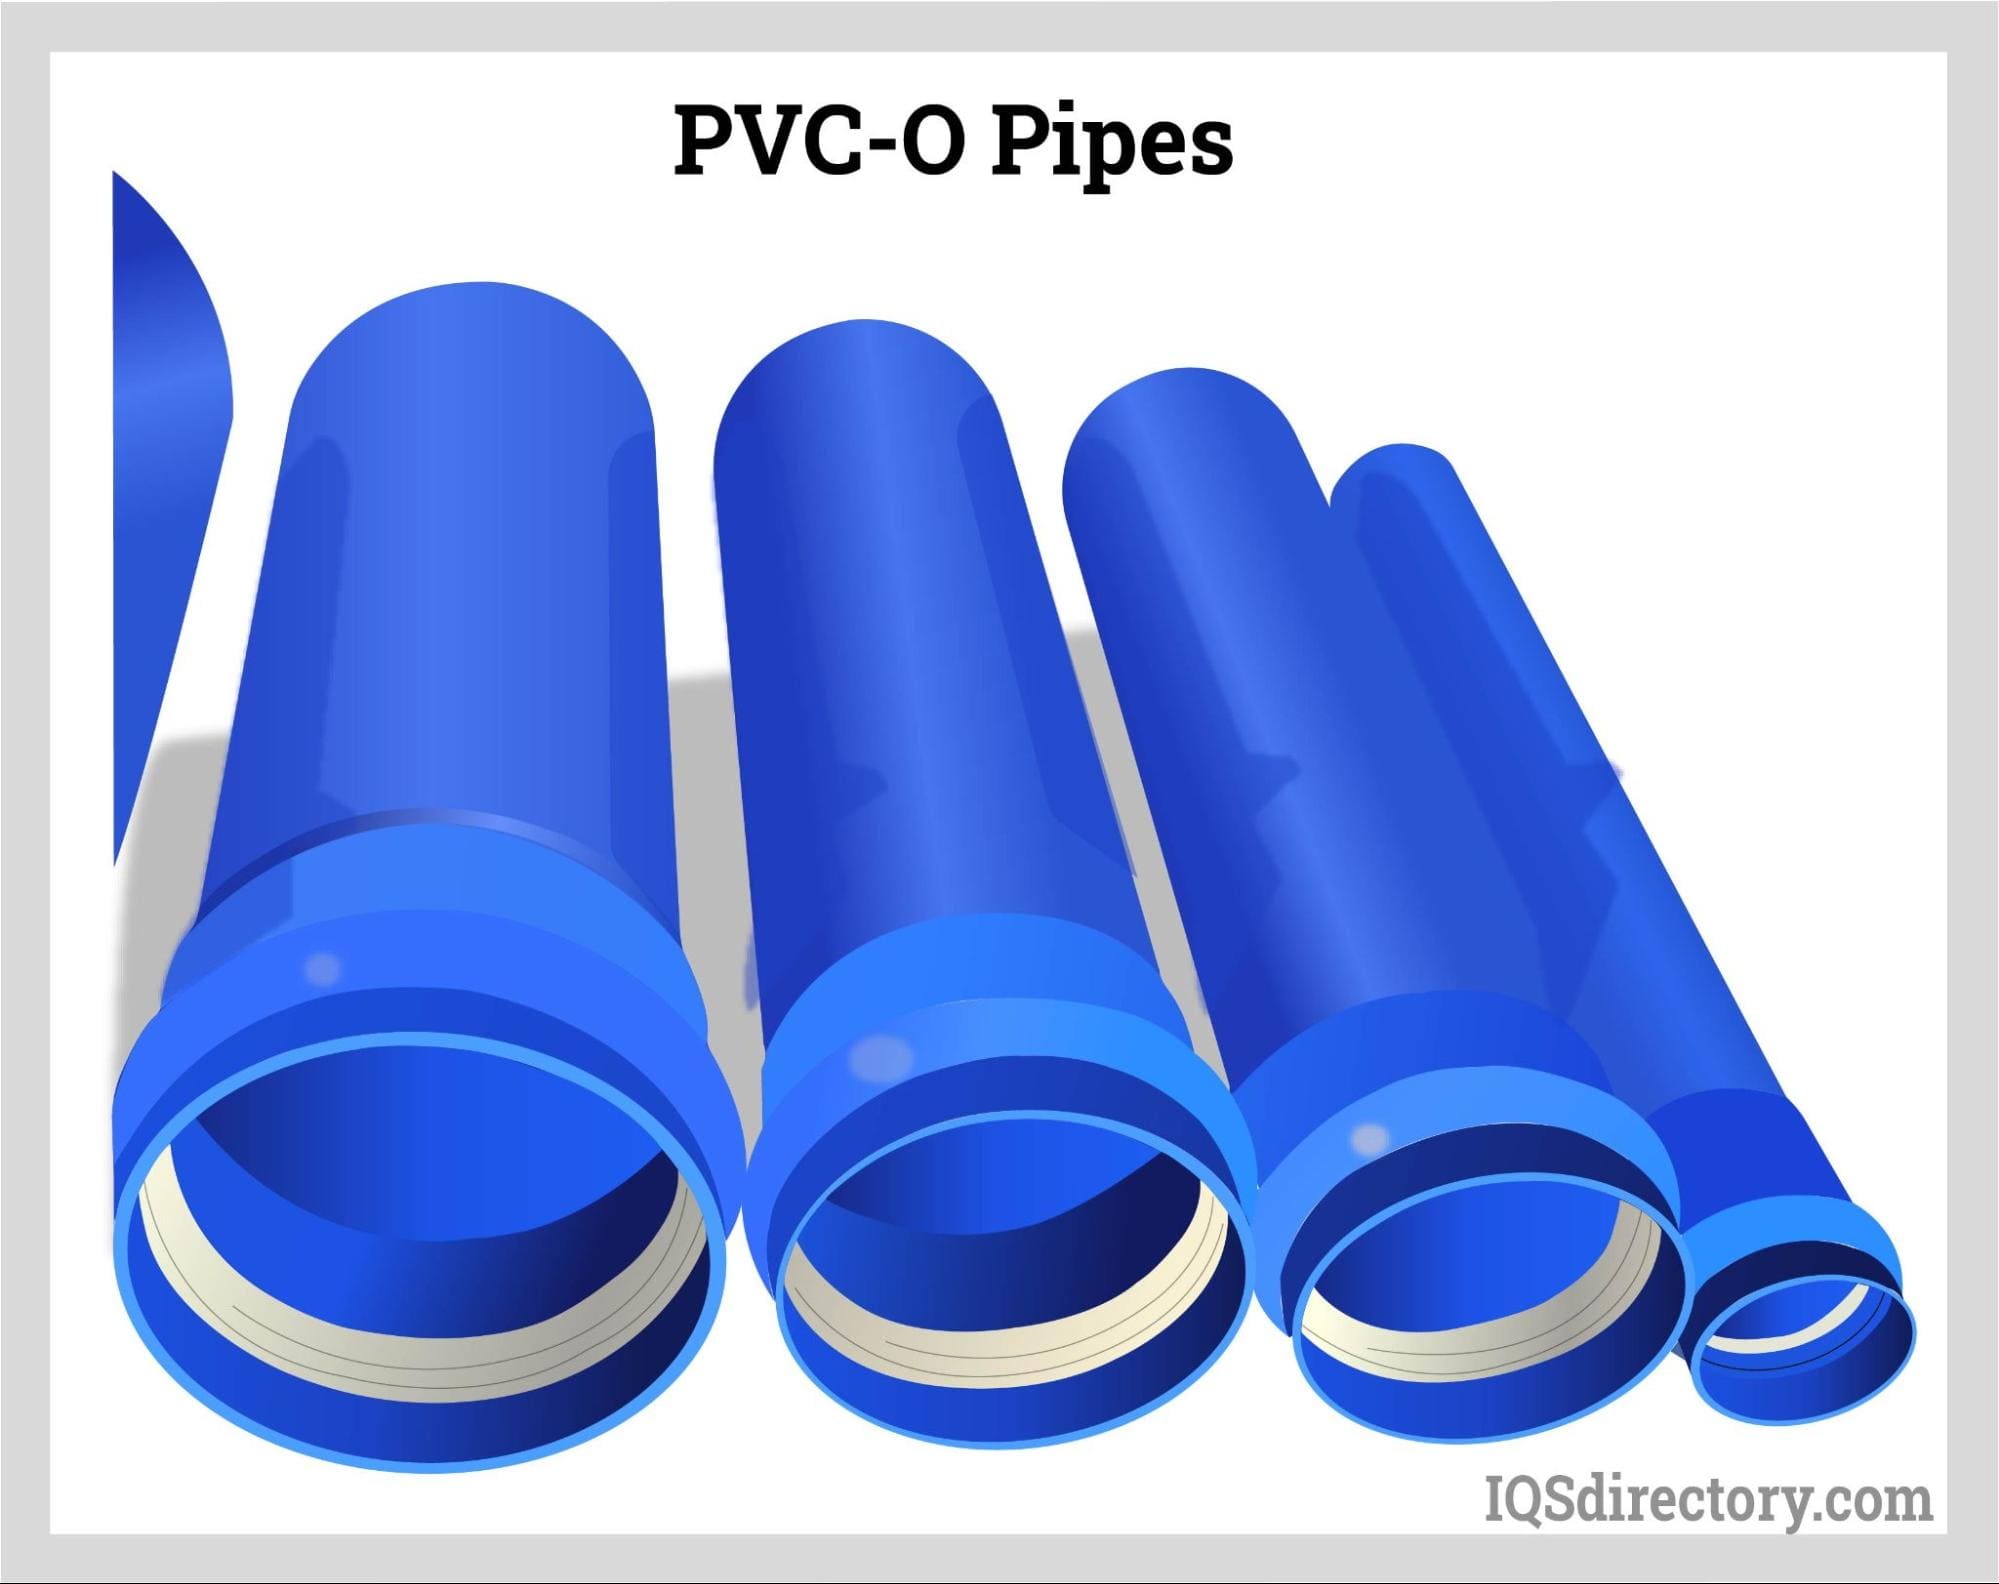 PVC-O Types